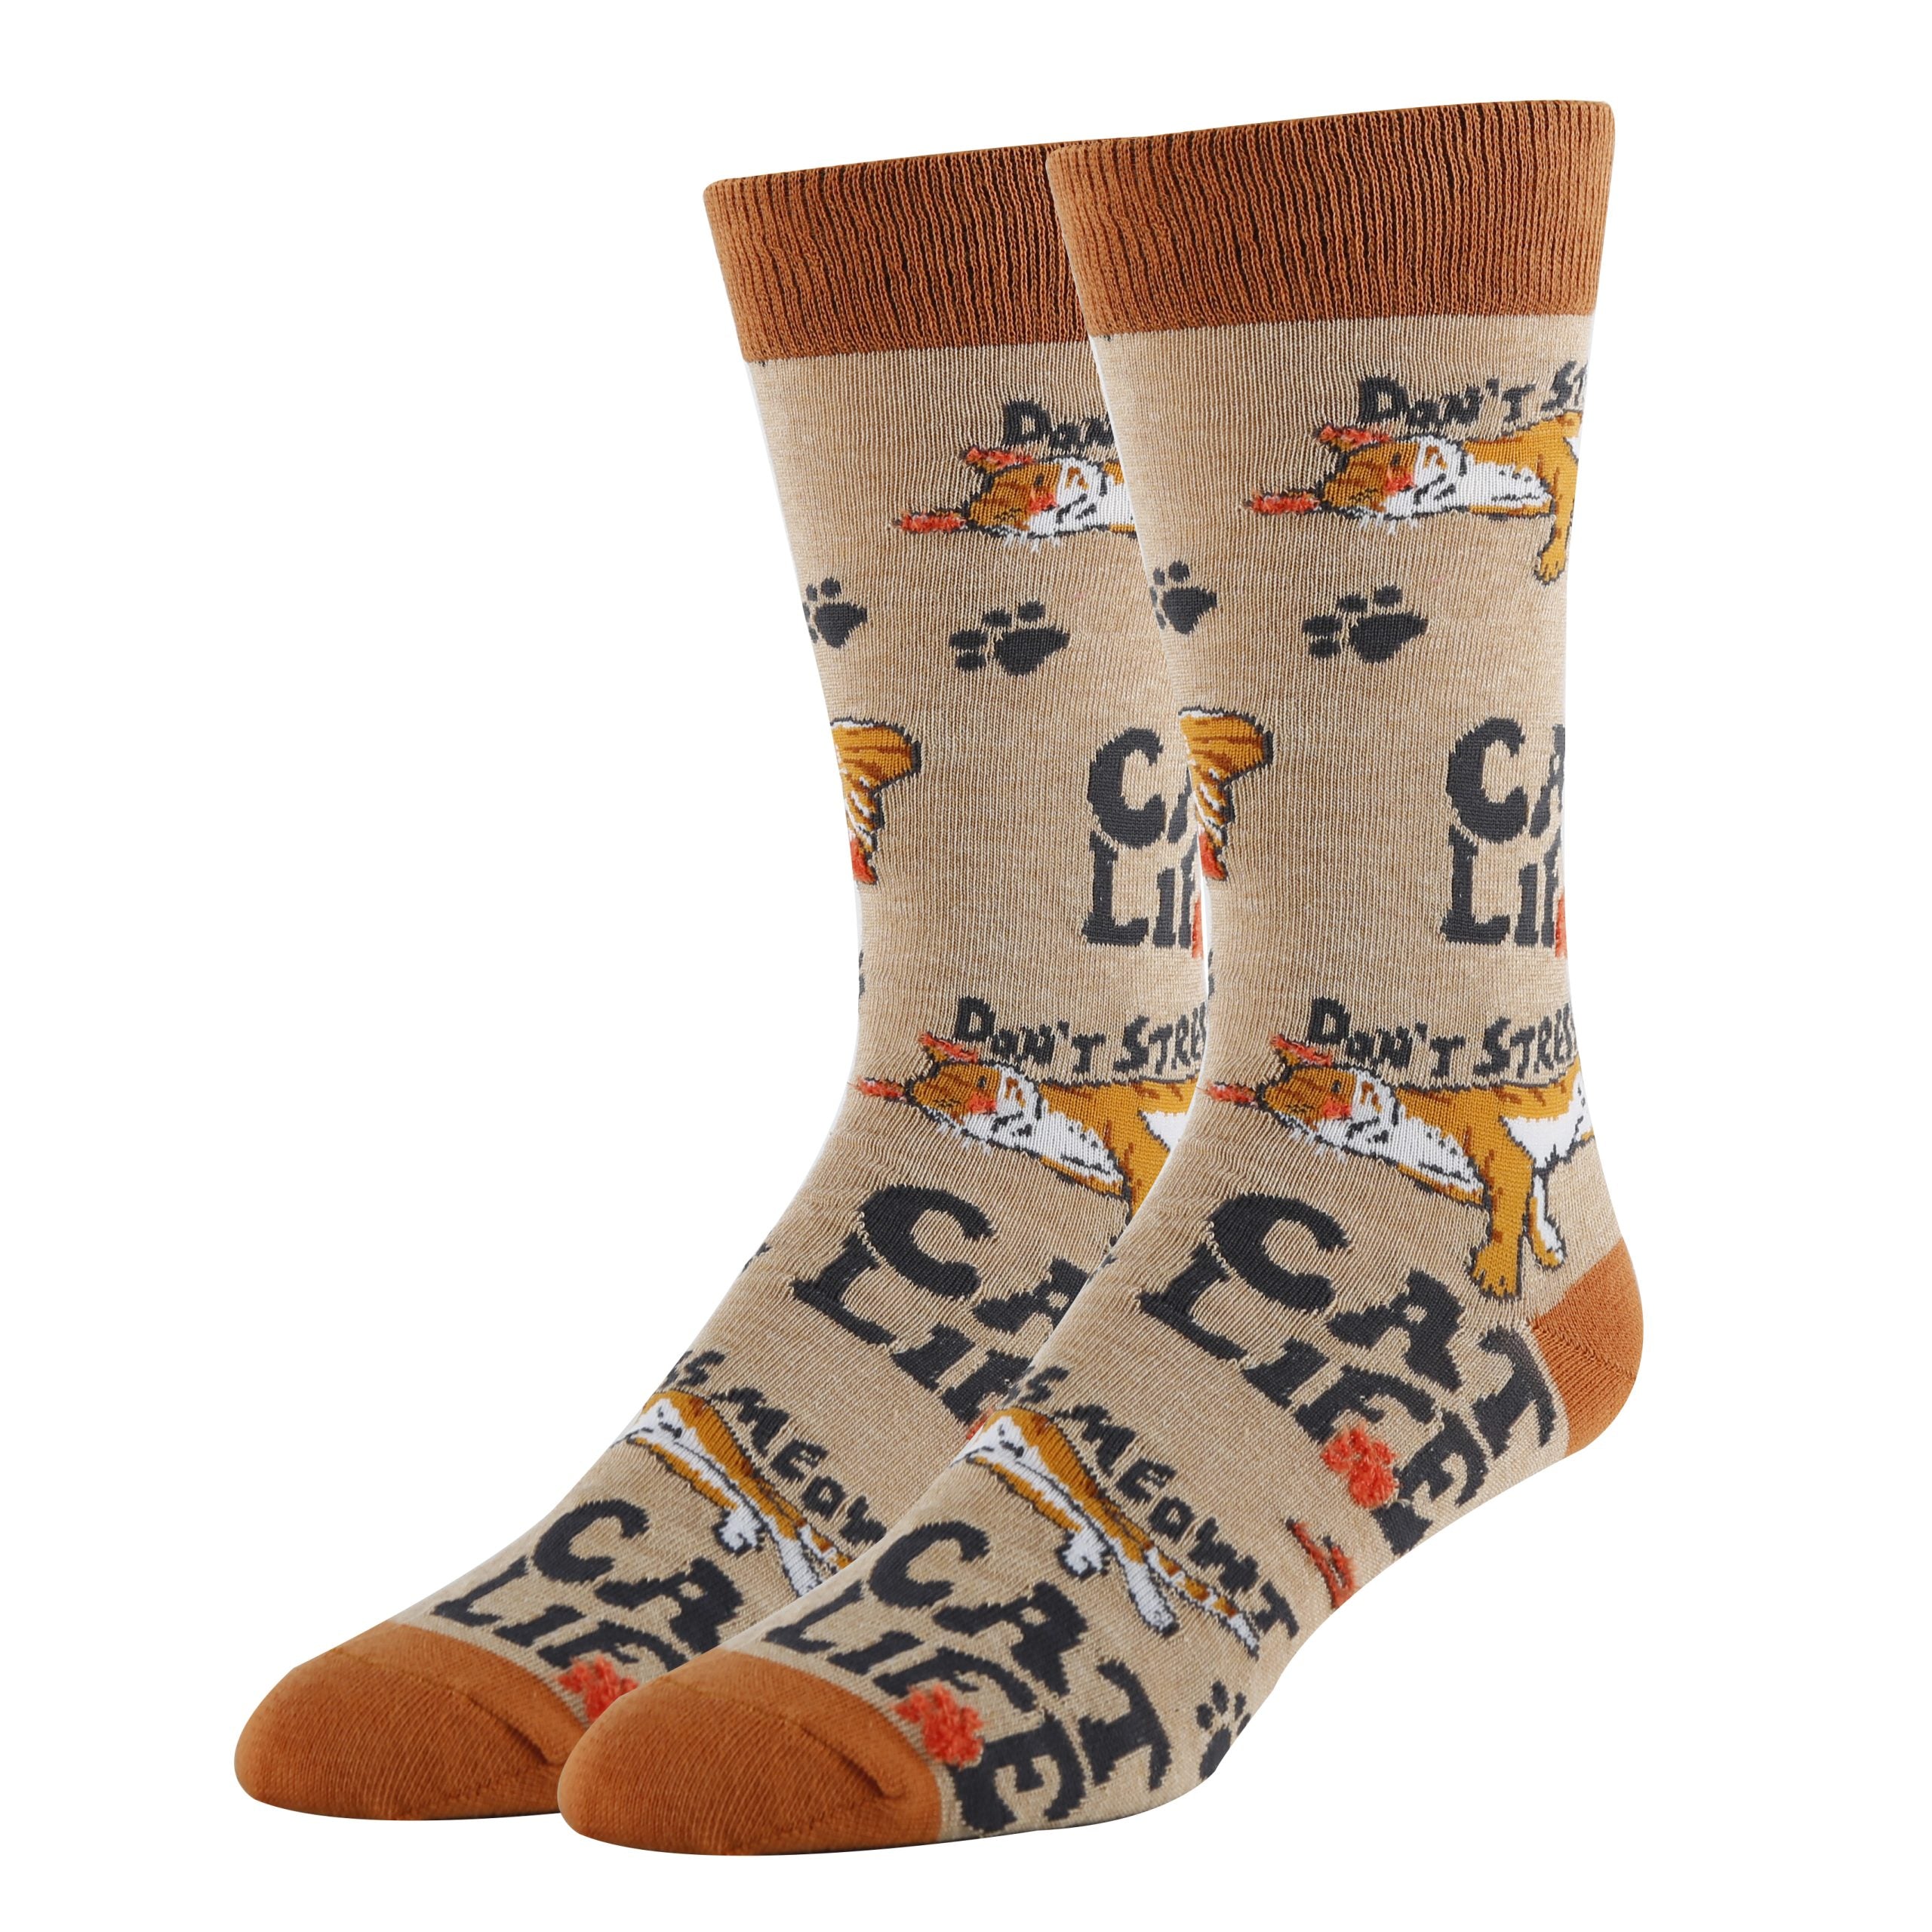 Cat Life Socks | Funny Crew Socks for Men